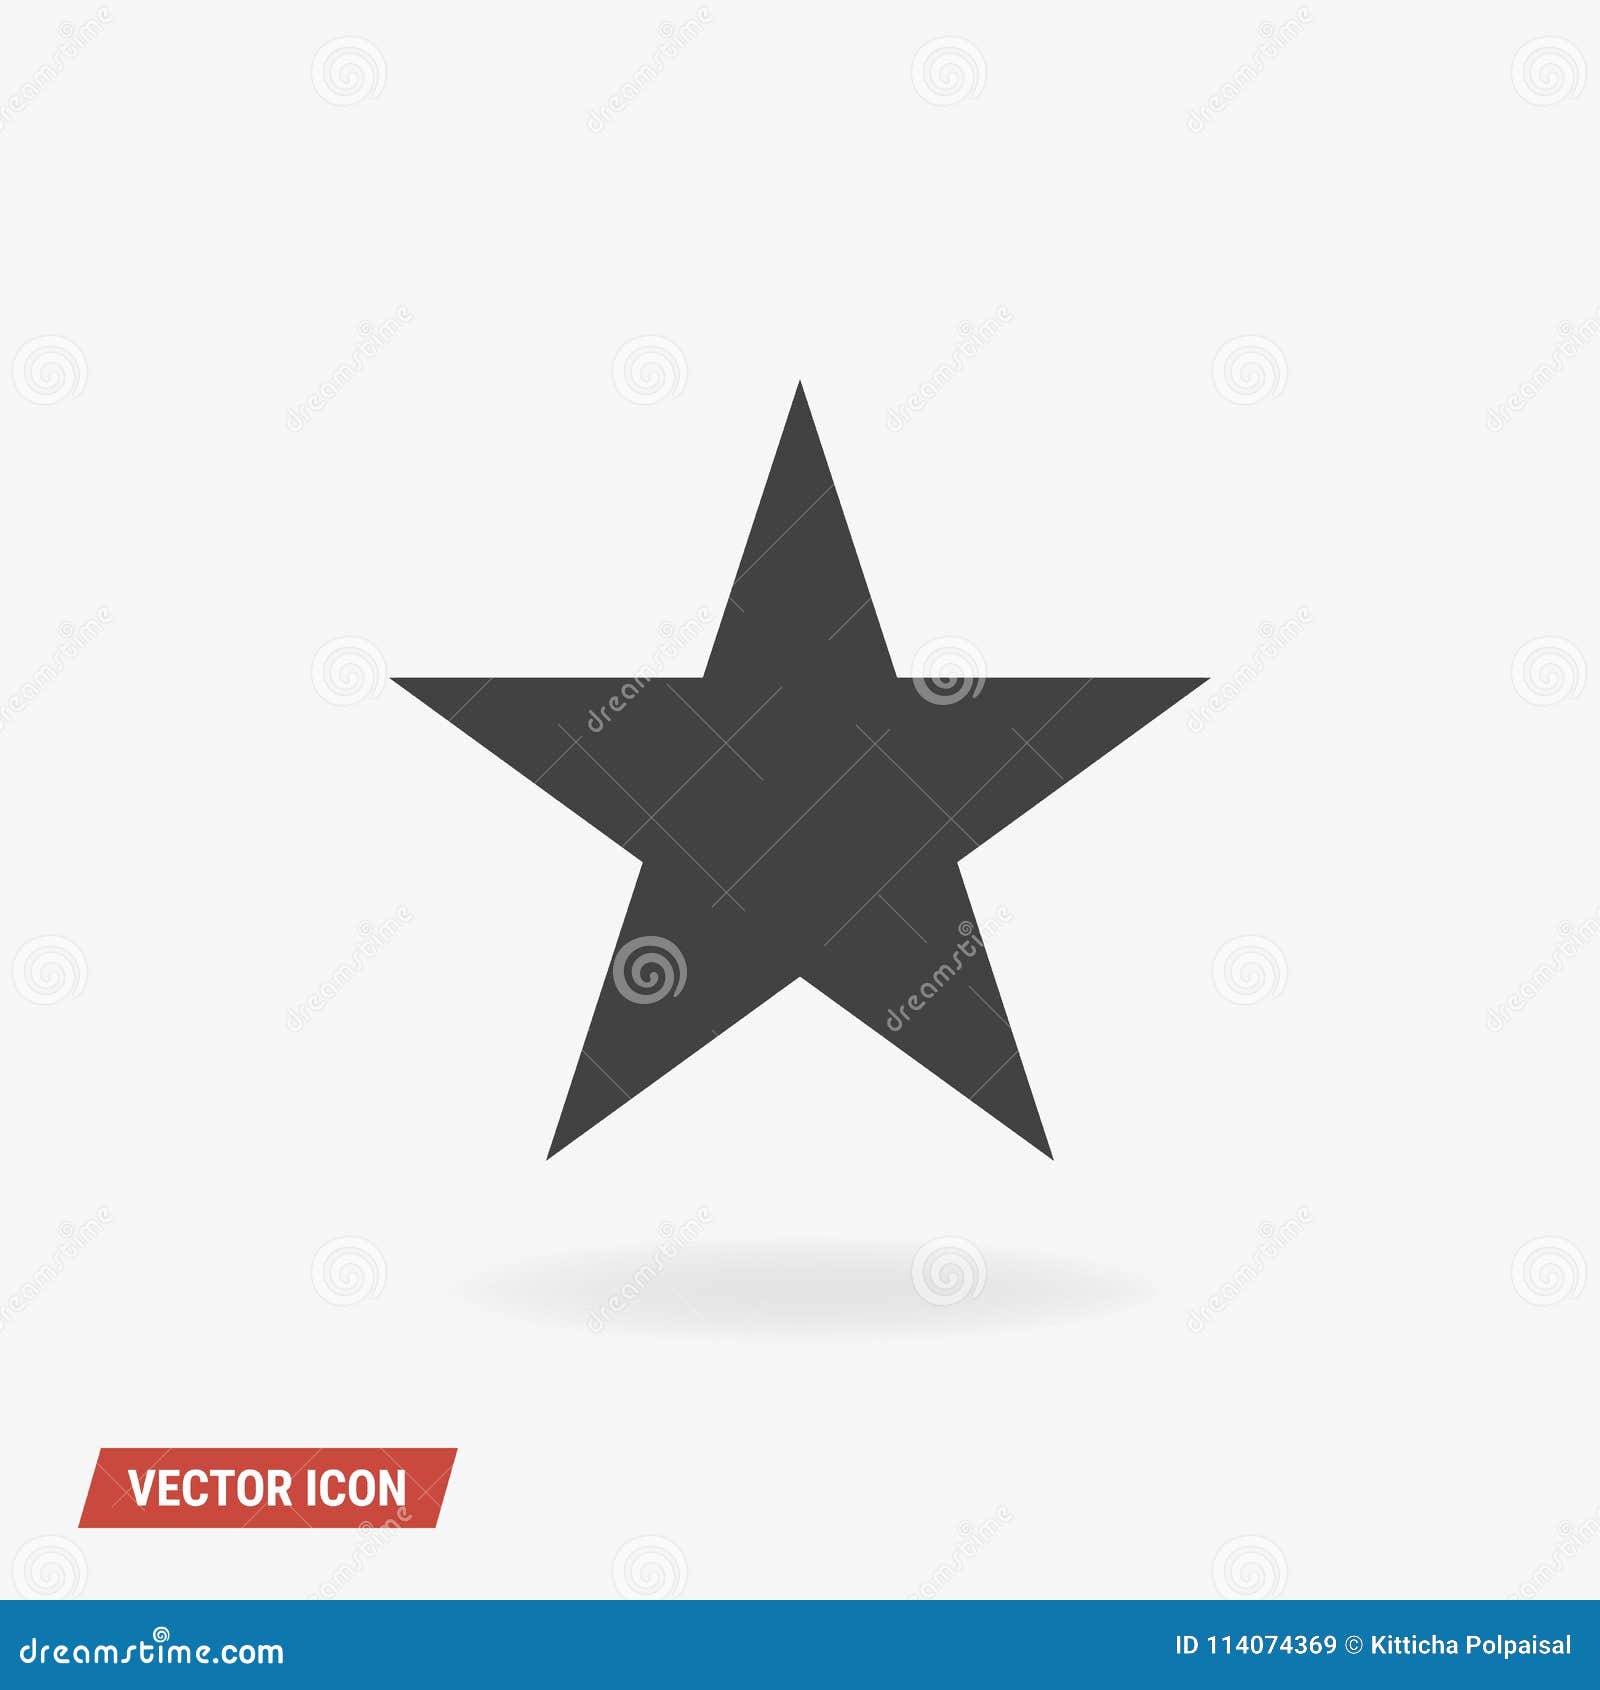 clasic star icon ,  illustion flat  style.